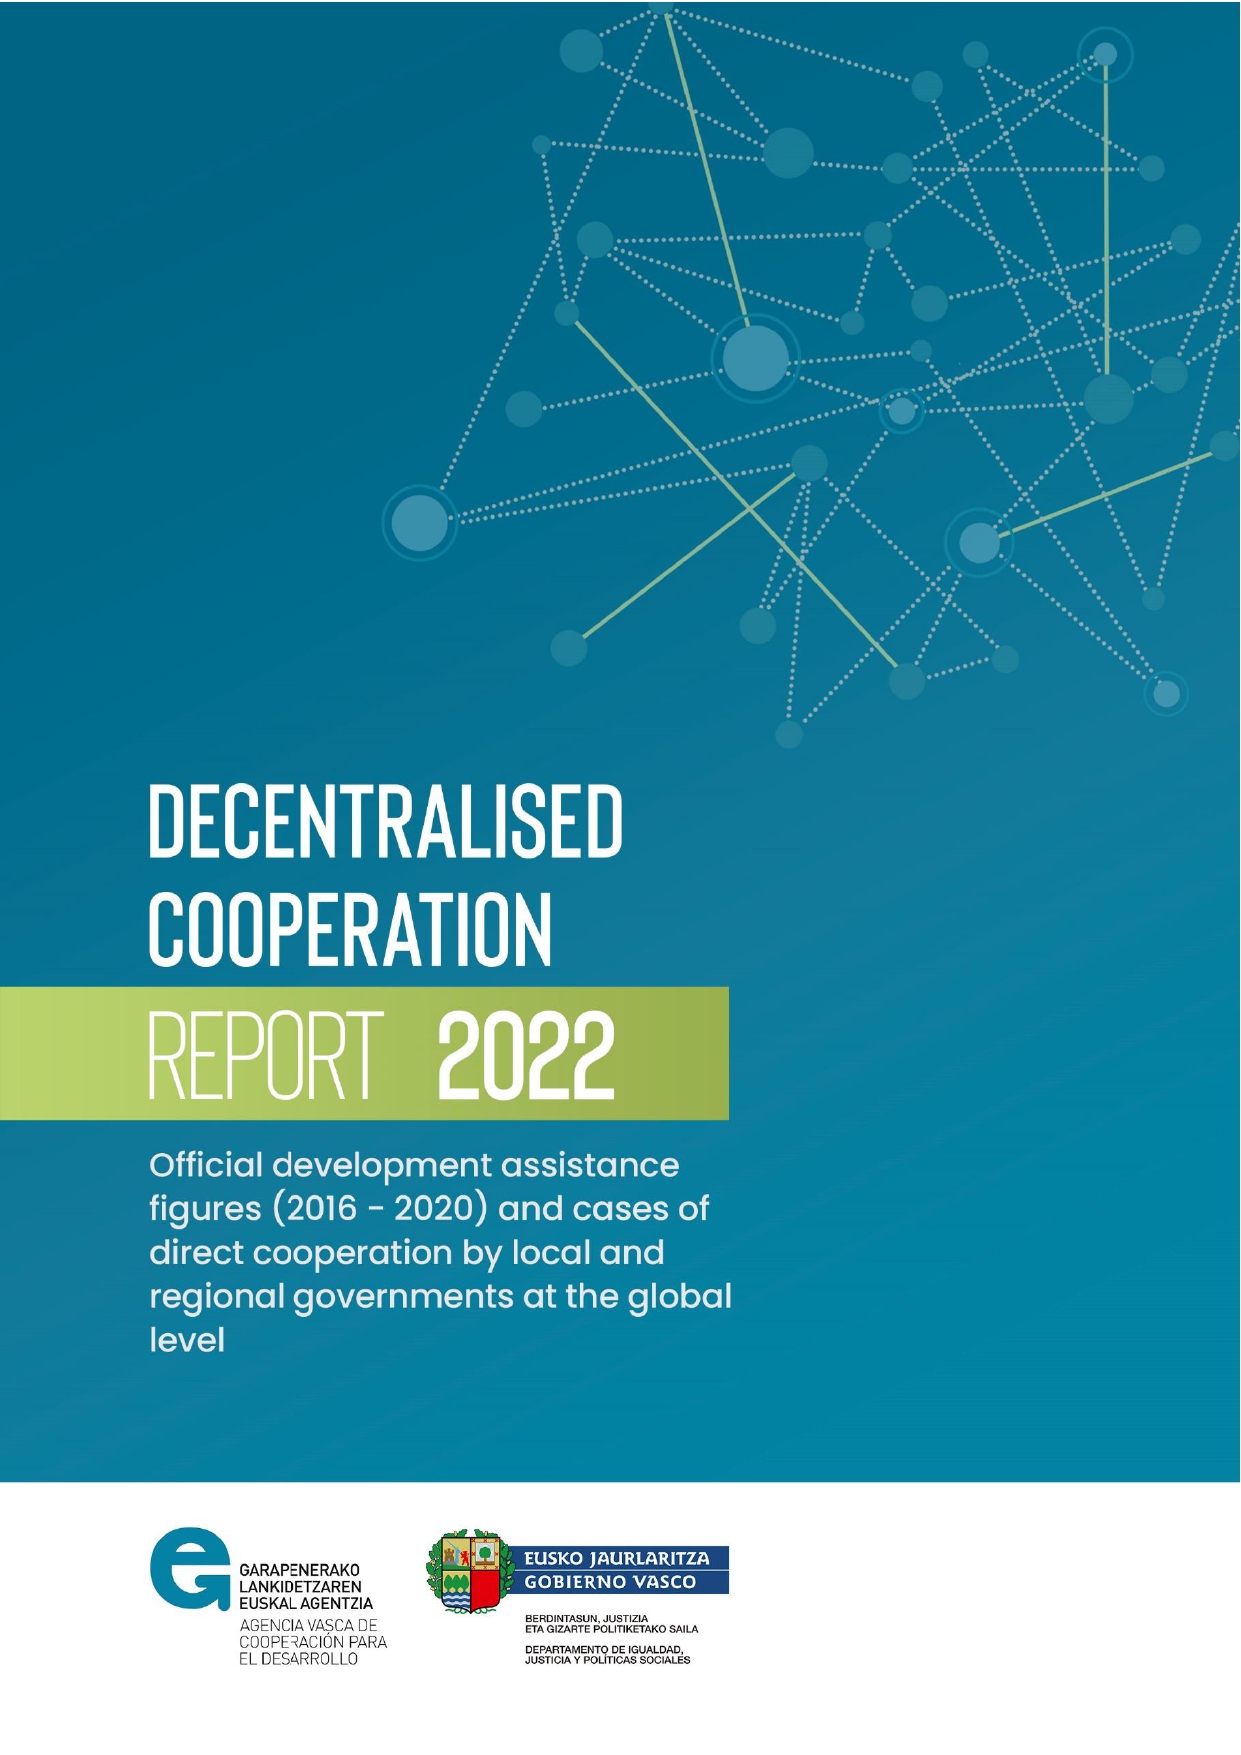 eLankidetza | Decentralised cooperation report 2022